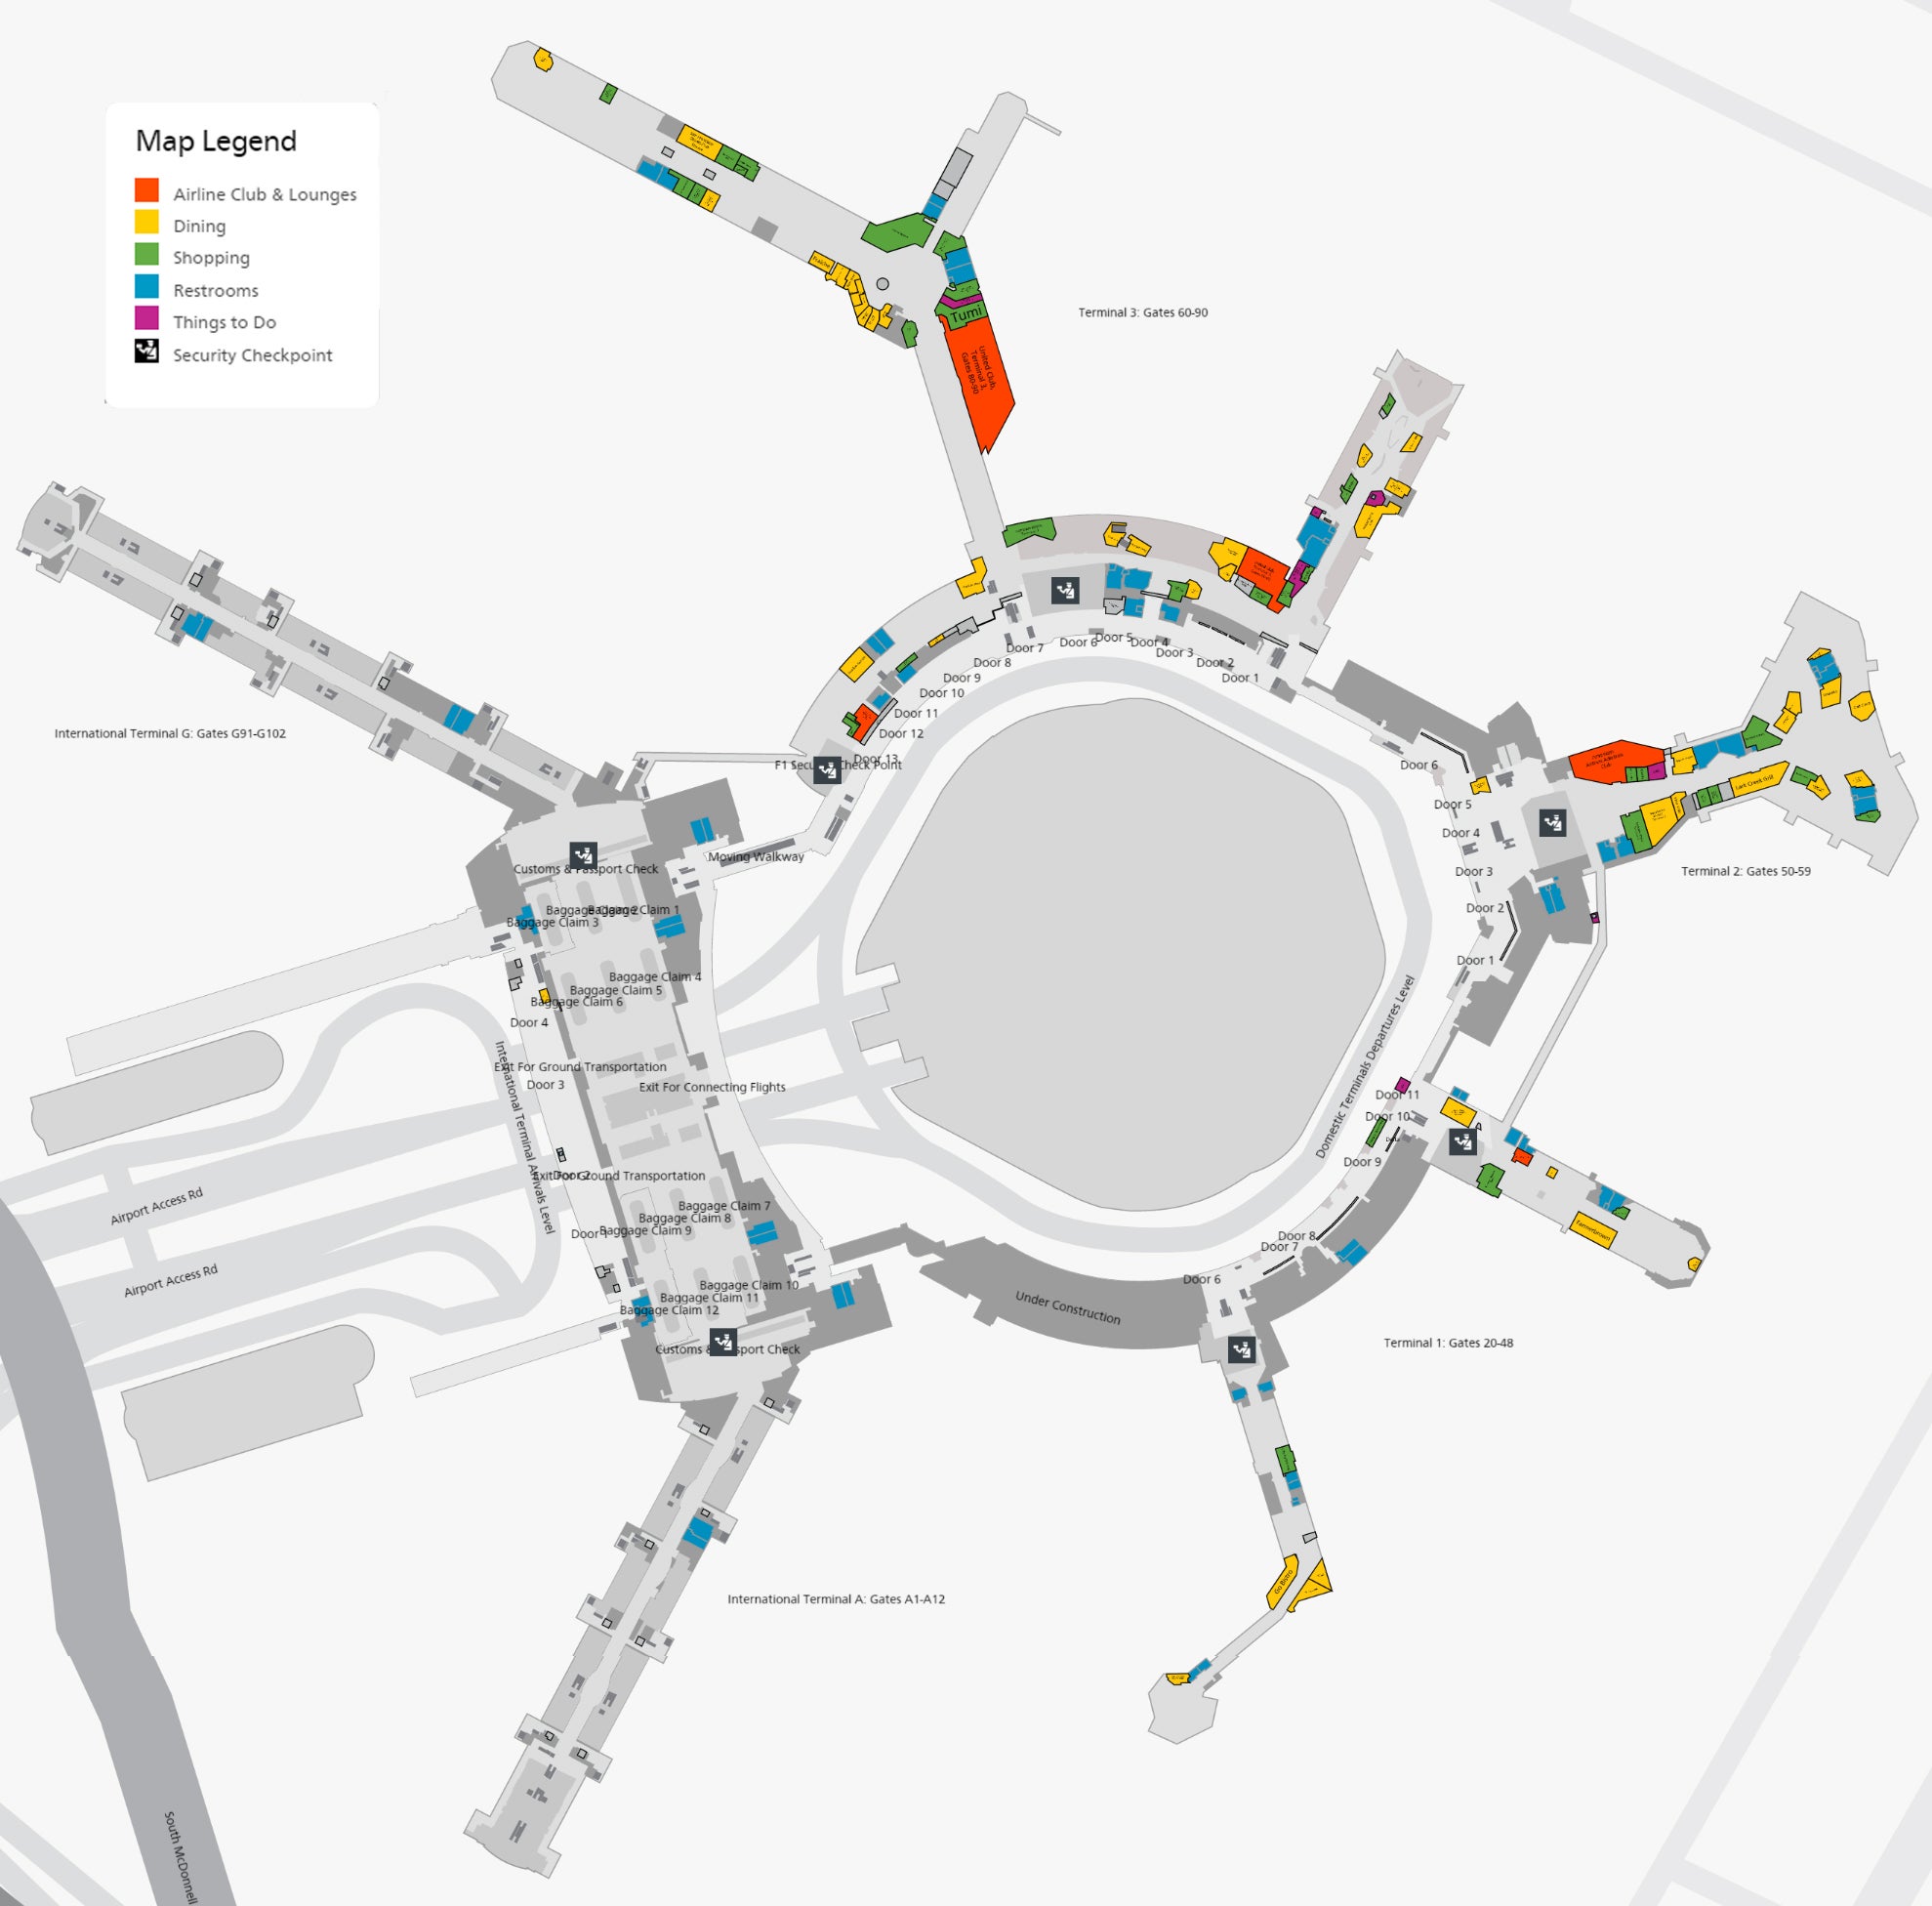 Sfo International Airport Terminal Map - Image to u